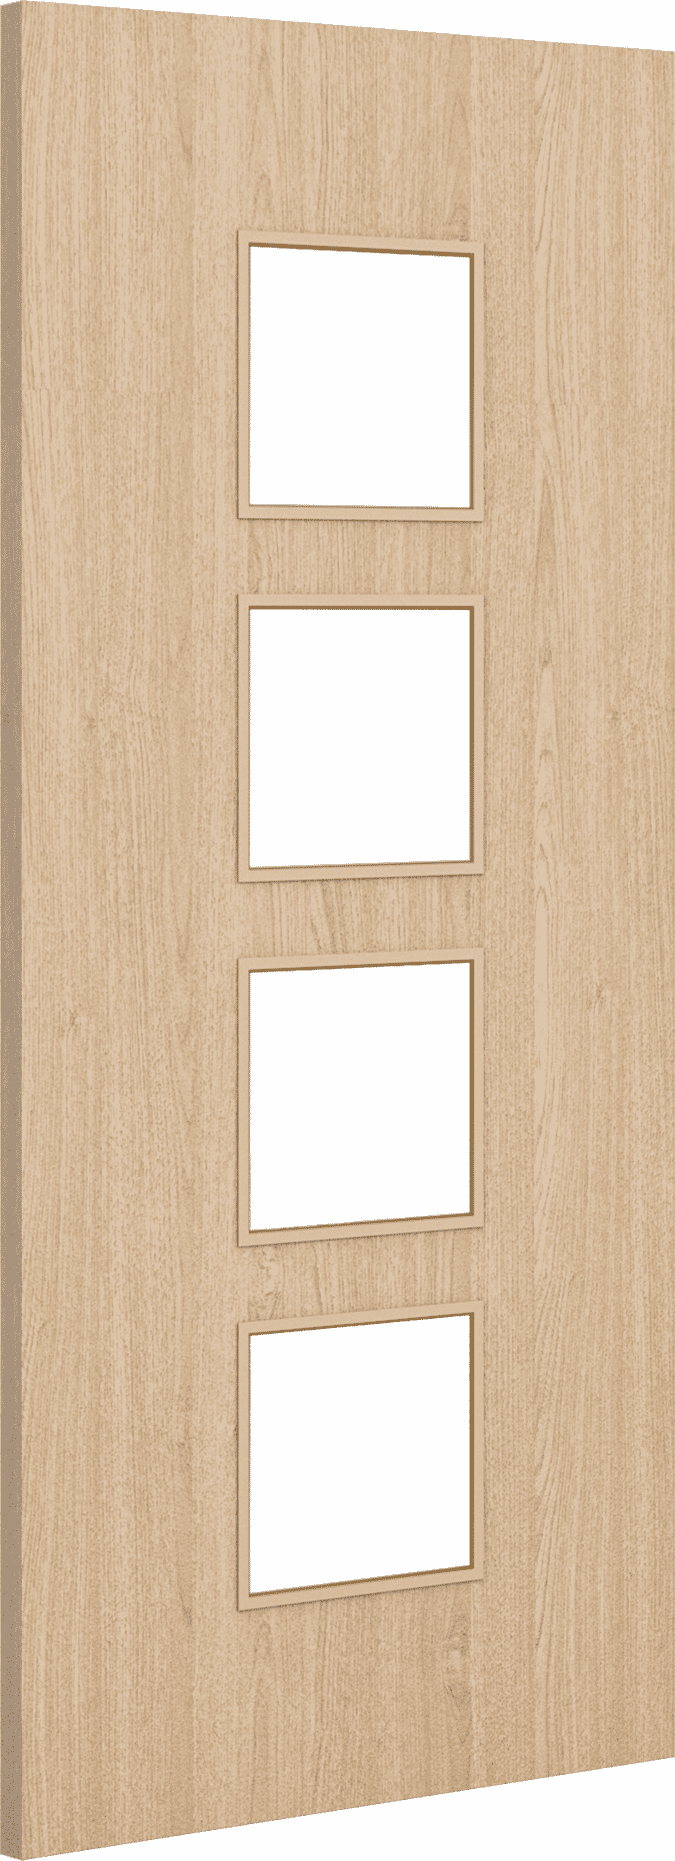 2040mm x 626mm x 44mm Architectural Oak 09 Frosted Glazed - Prefinished FD30 Fire Door Blank